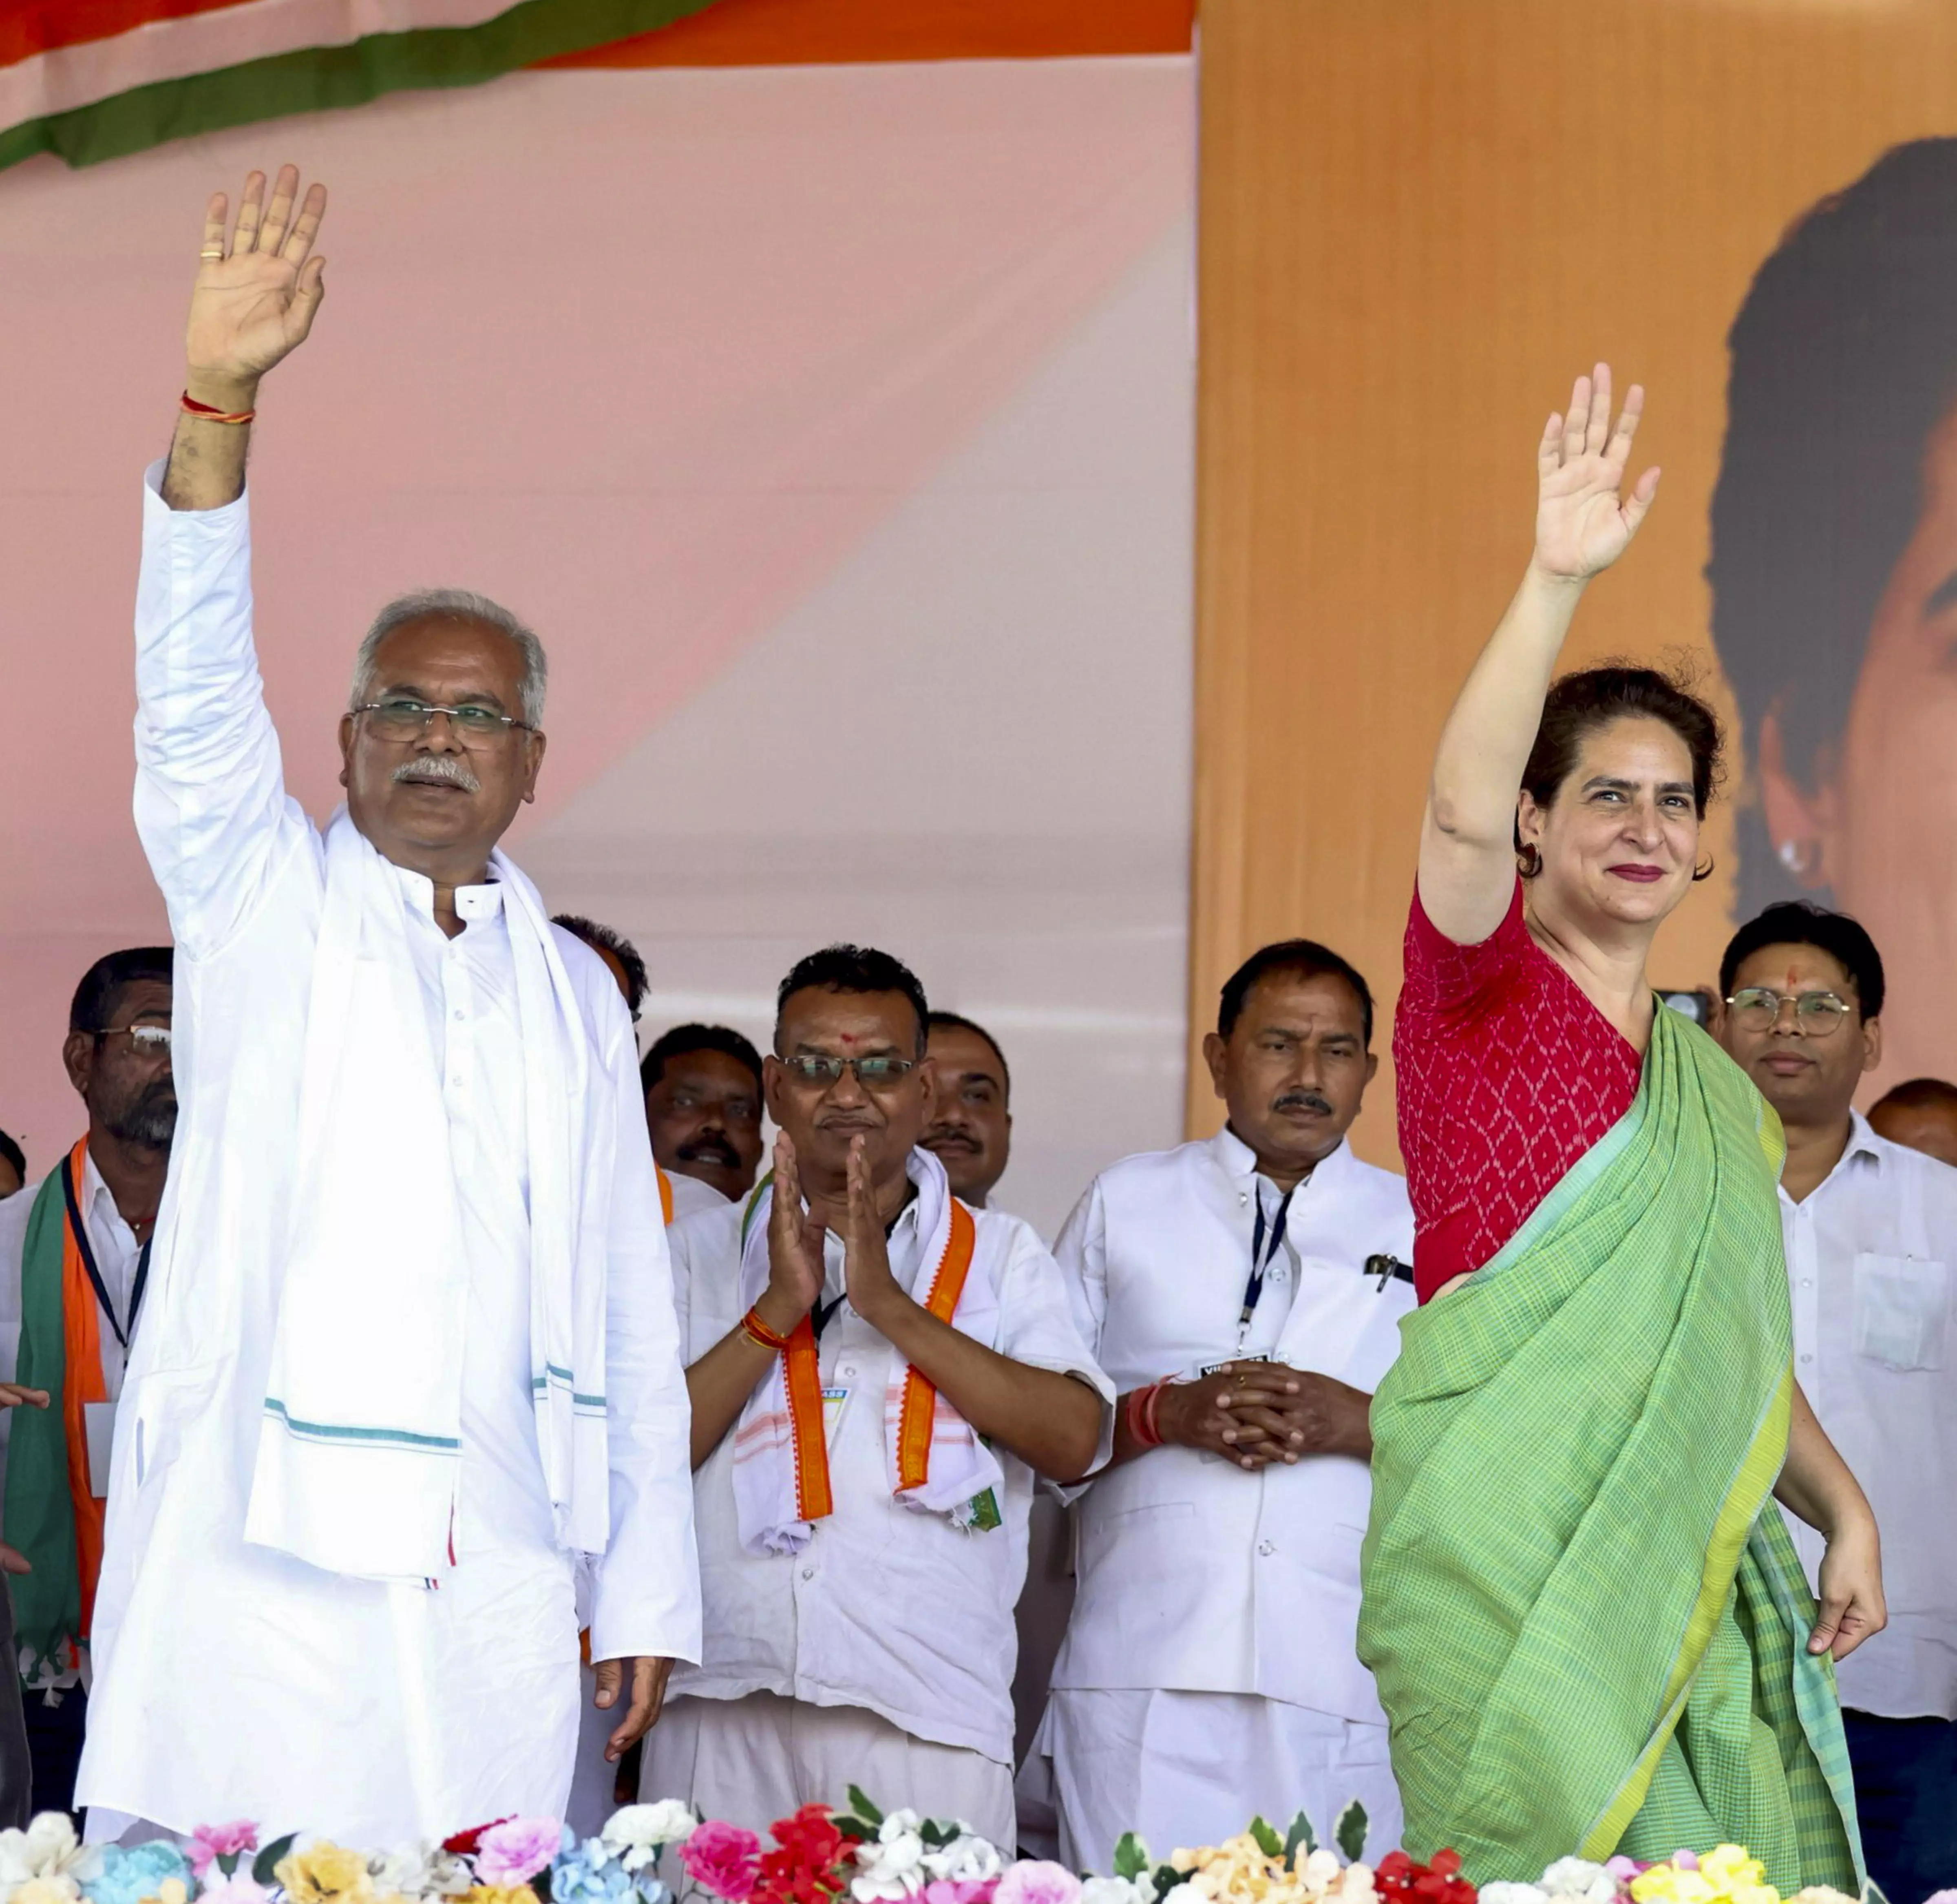 BJP wants to change Constitution, curtail peoples rights: Priyanka Gandhi in Chhattisgarh